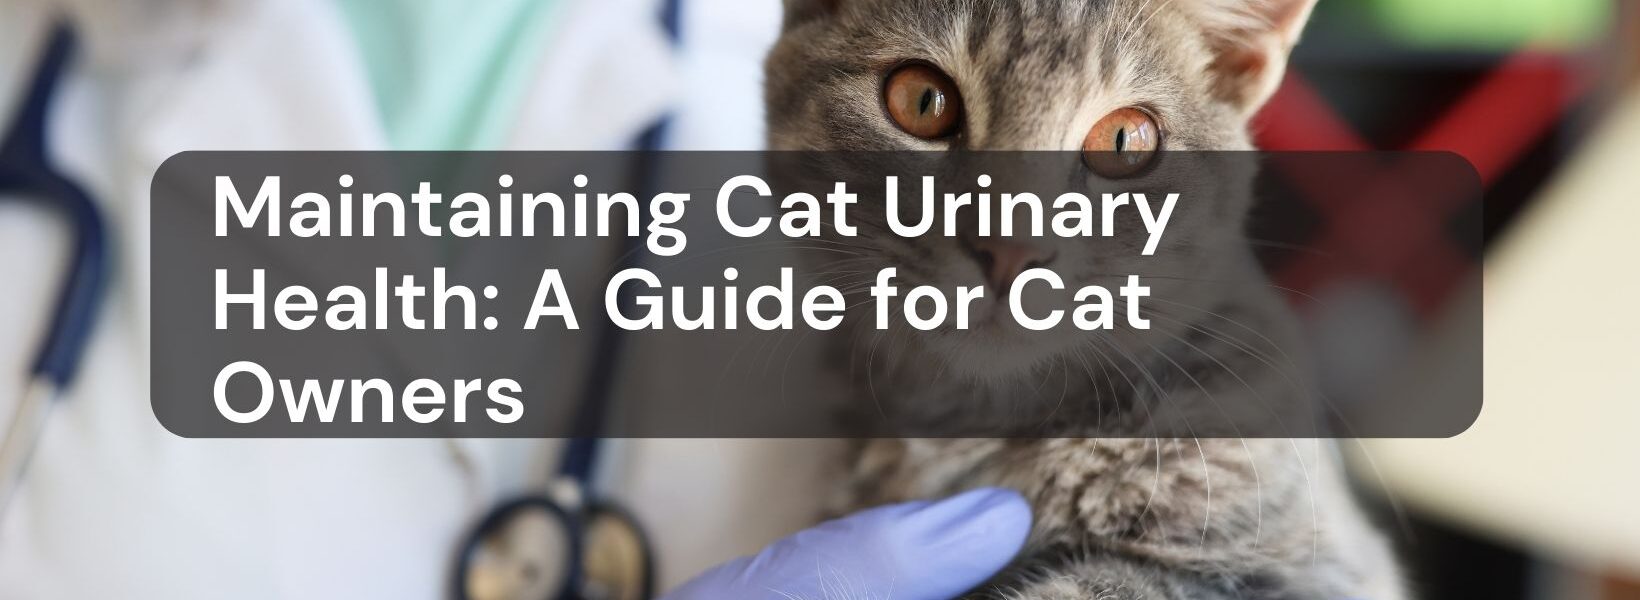 Cat Urinary Health